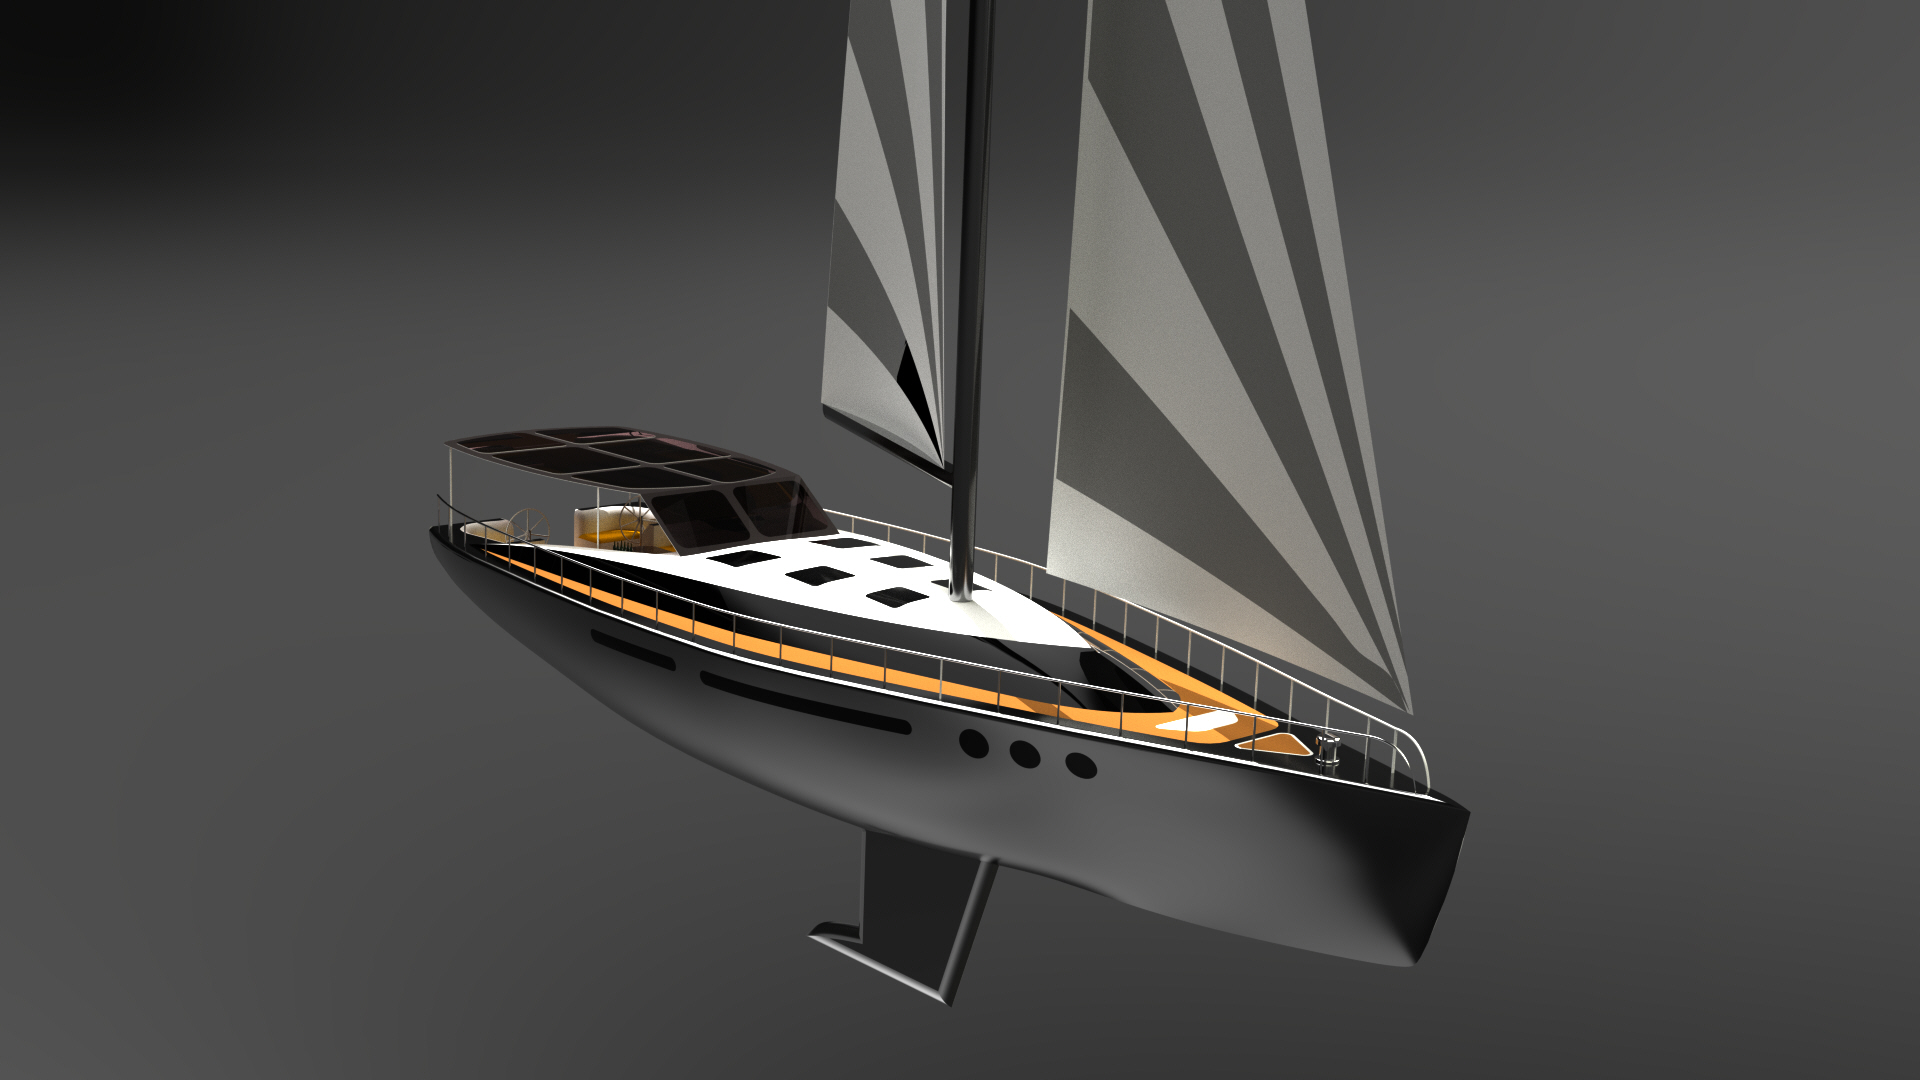 Sailing Yacht NOVA 24米帆船造型